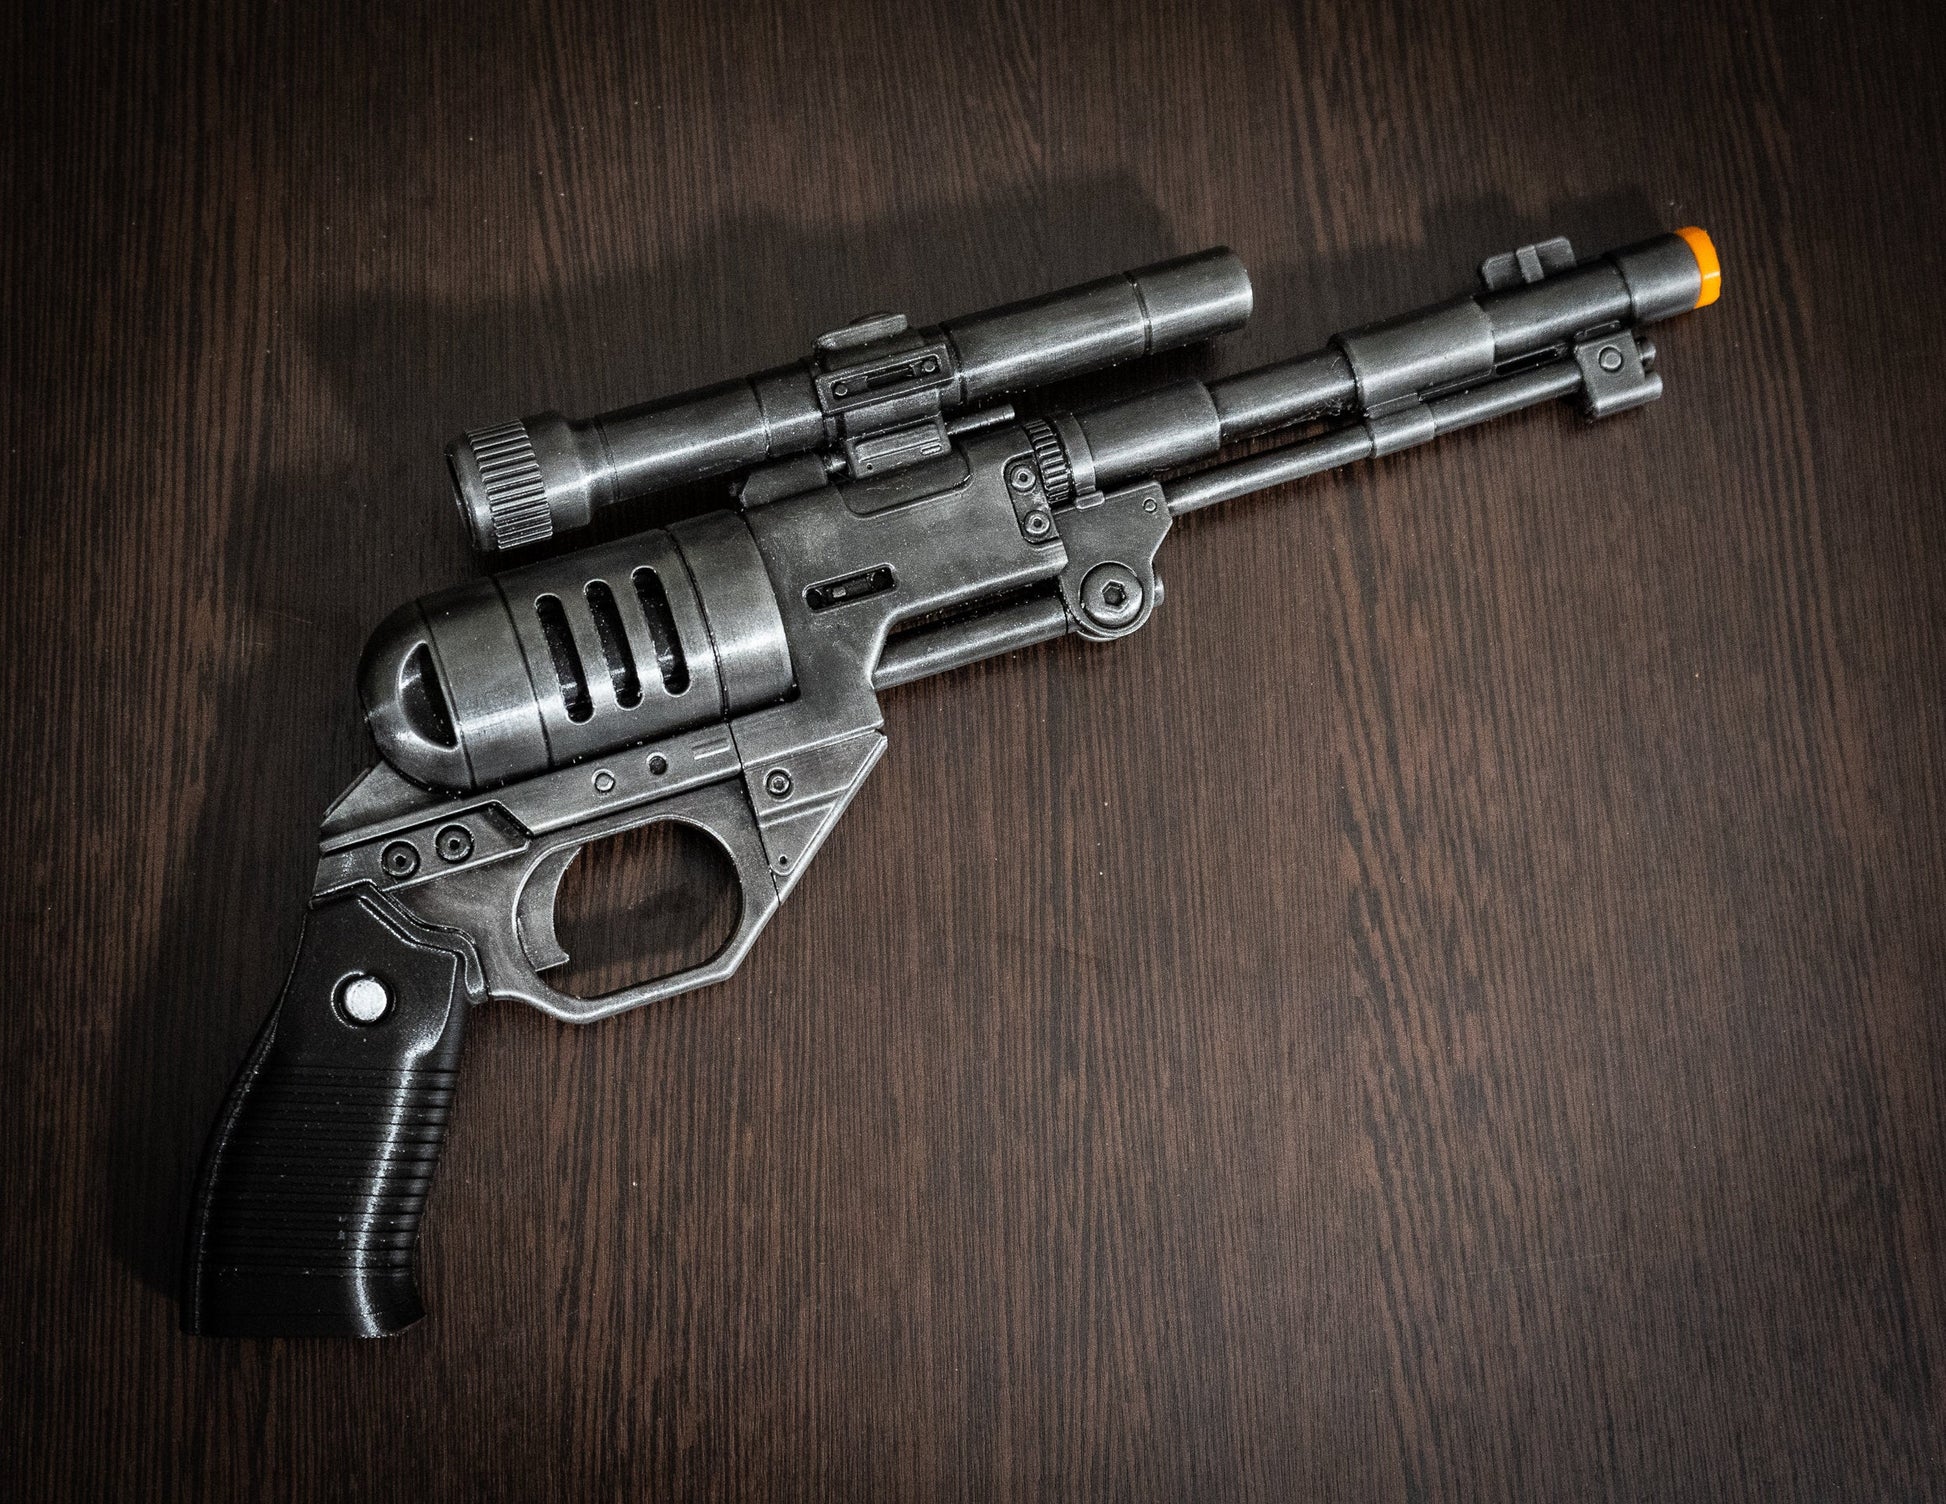 DE-10 blaster pistol | Star Wars Replica | Star Wars Props | Star Wars Cosplay - 3DPrintProps